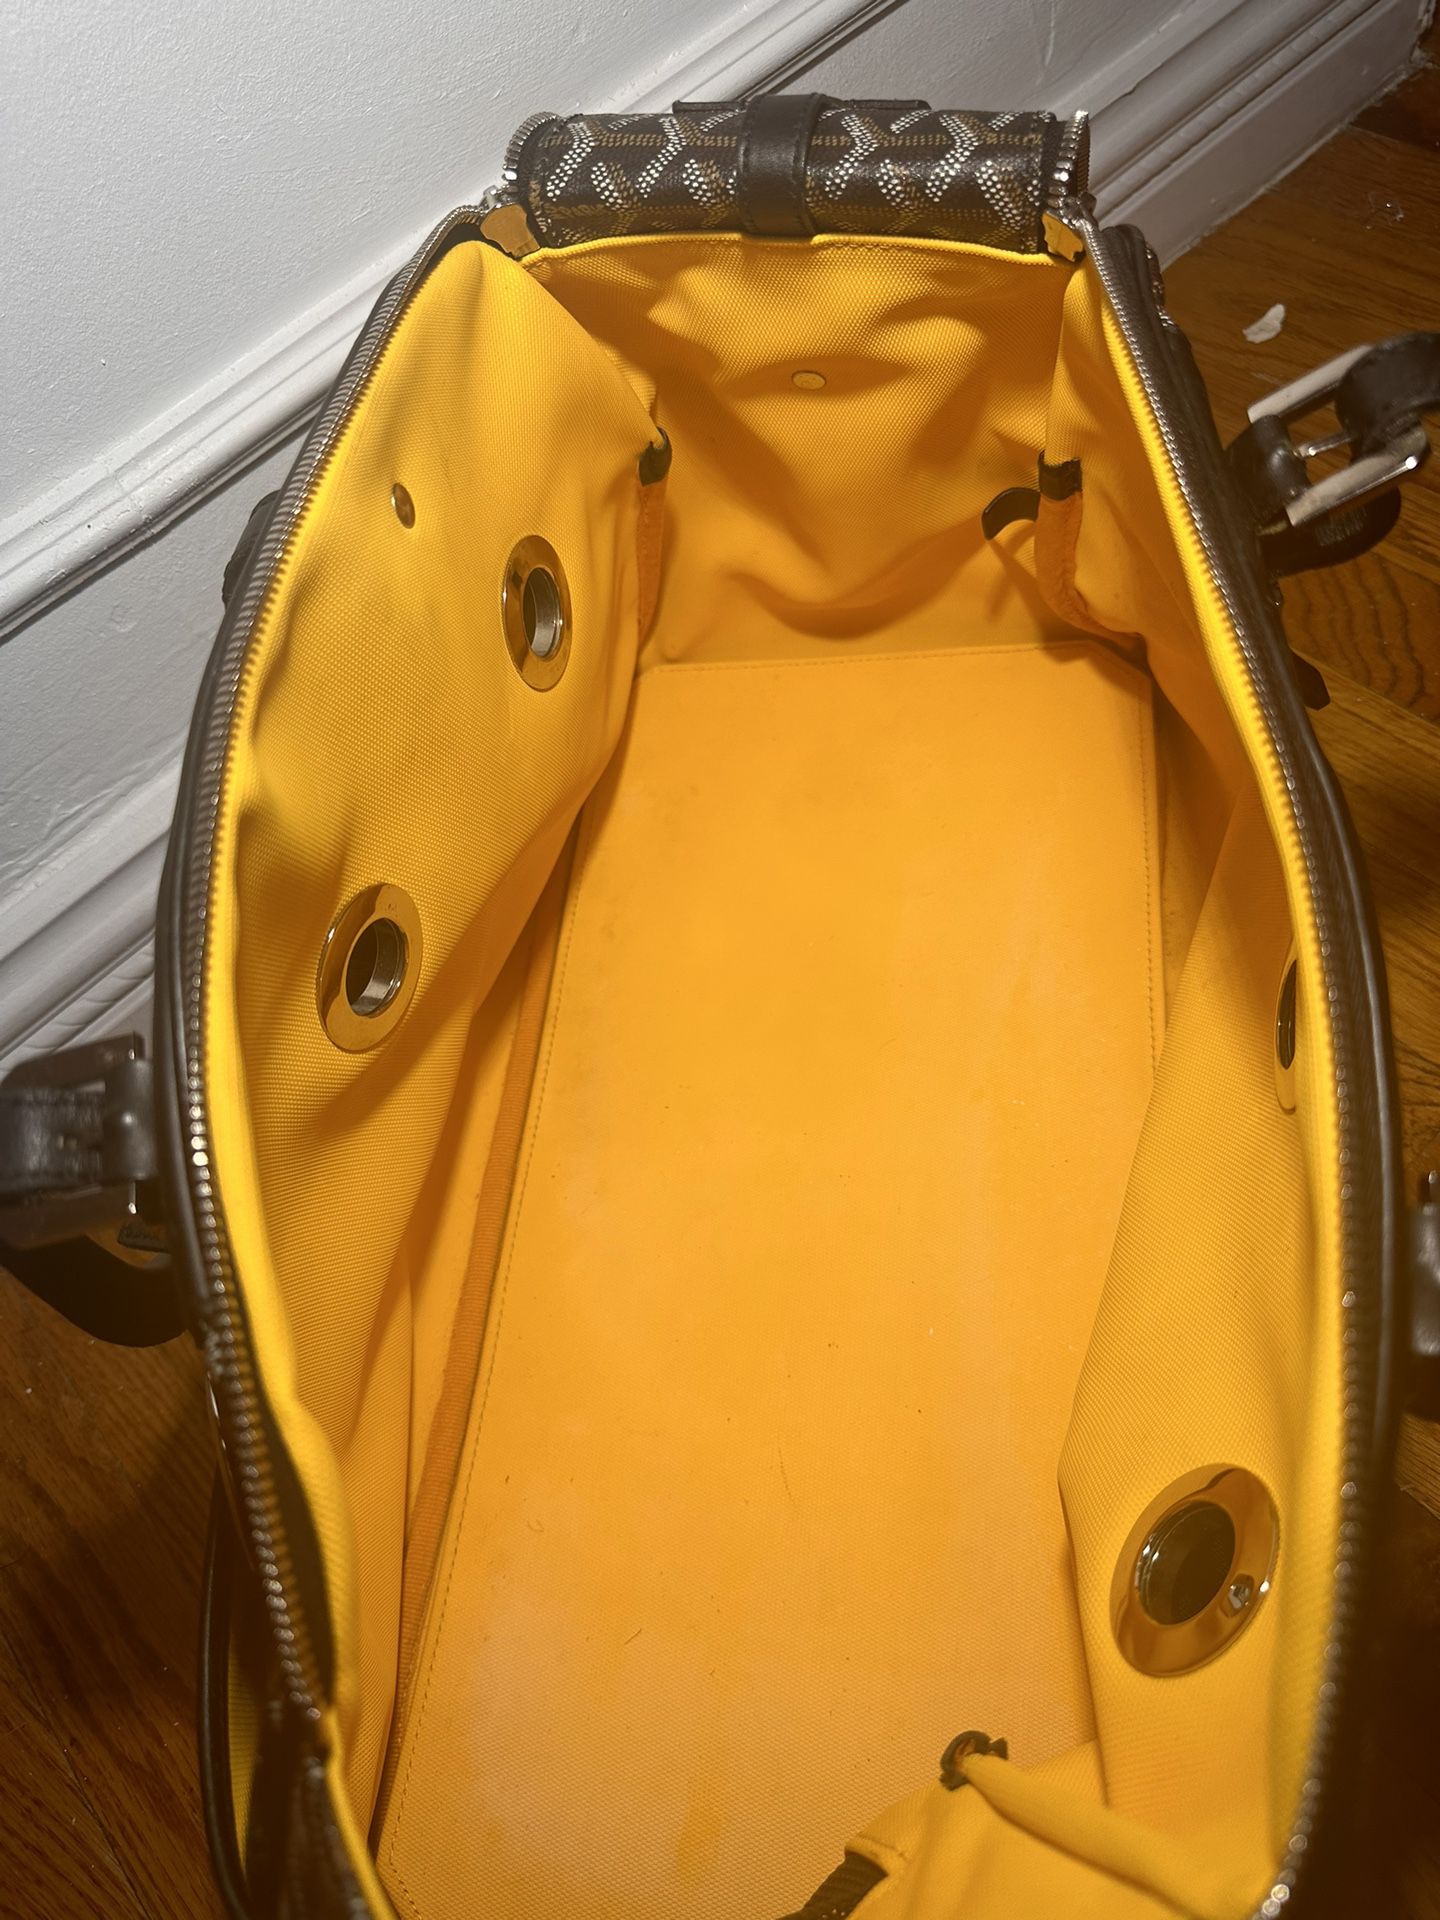 Goyard Villette Hulot MM Dog Travel Tote Bag Yellow Coated Canvas Top  Handle Shoulder Bag – THE-ECHELON